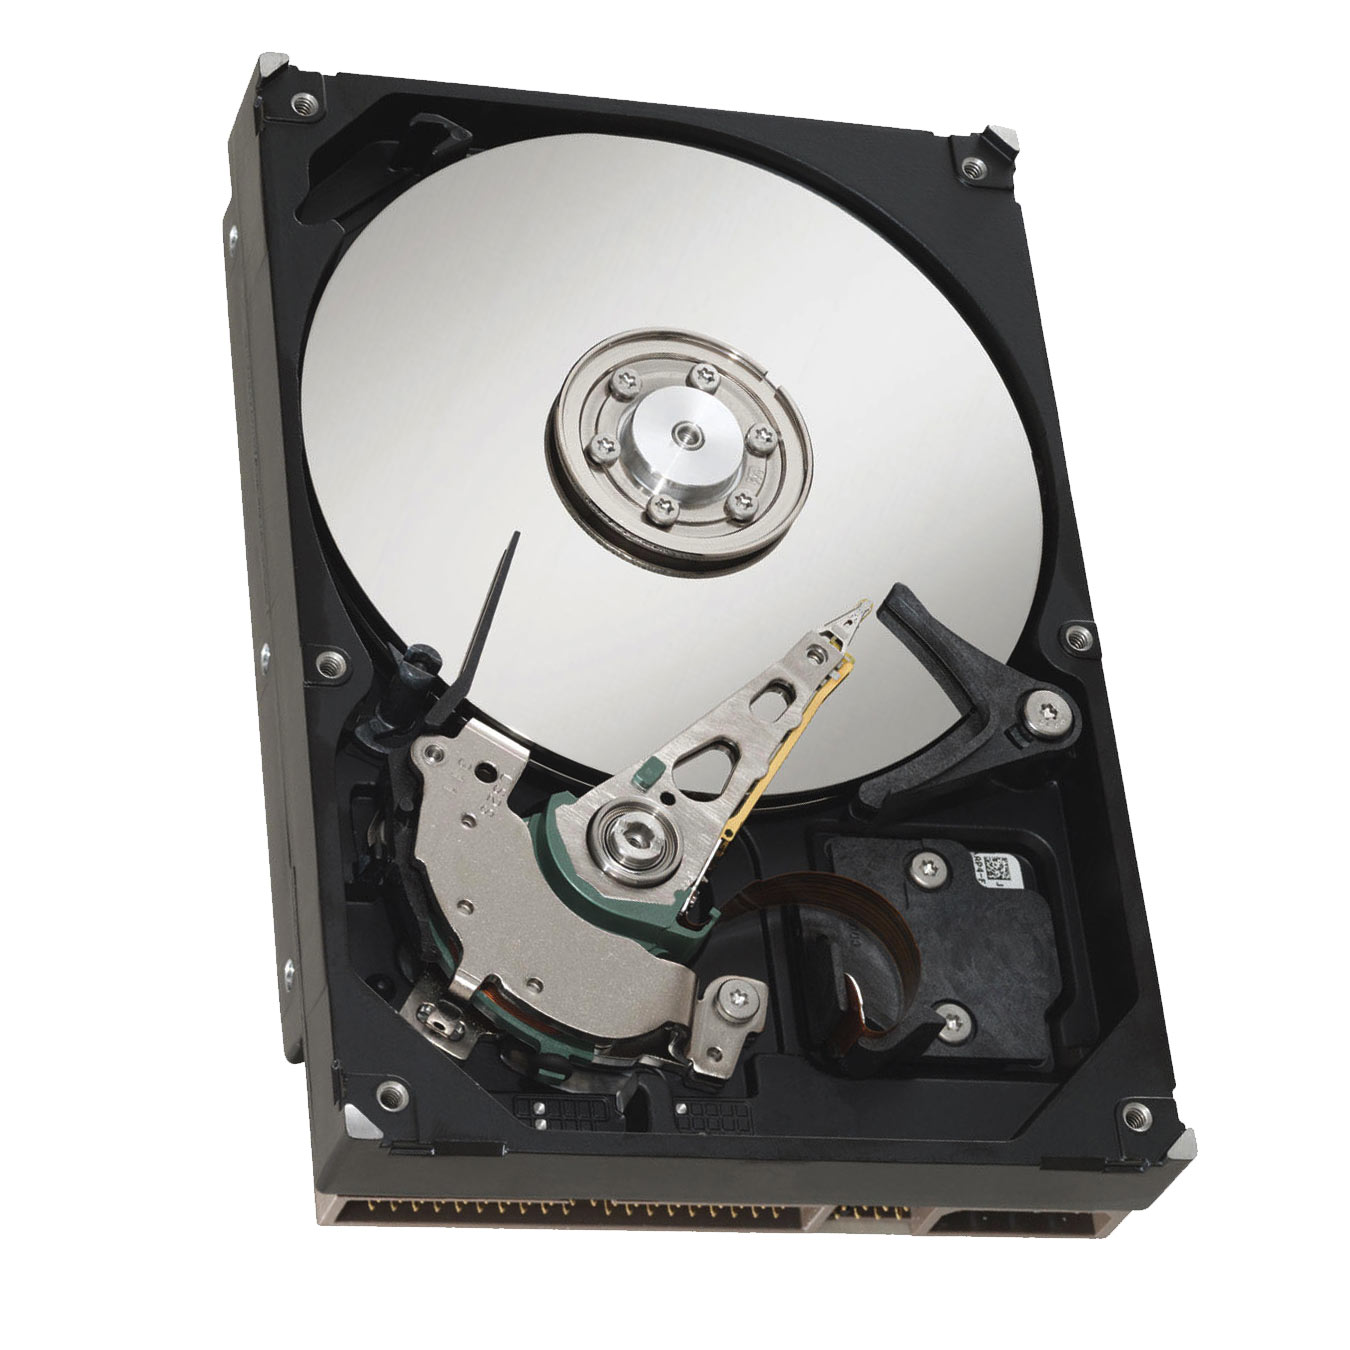 337366-001 | HP 2.1GB IDE 3.5-inch Internal Desktop Hard Drive for Presario 2200 Desktop